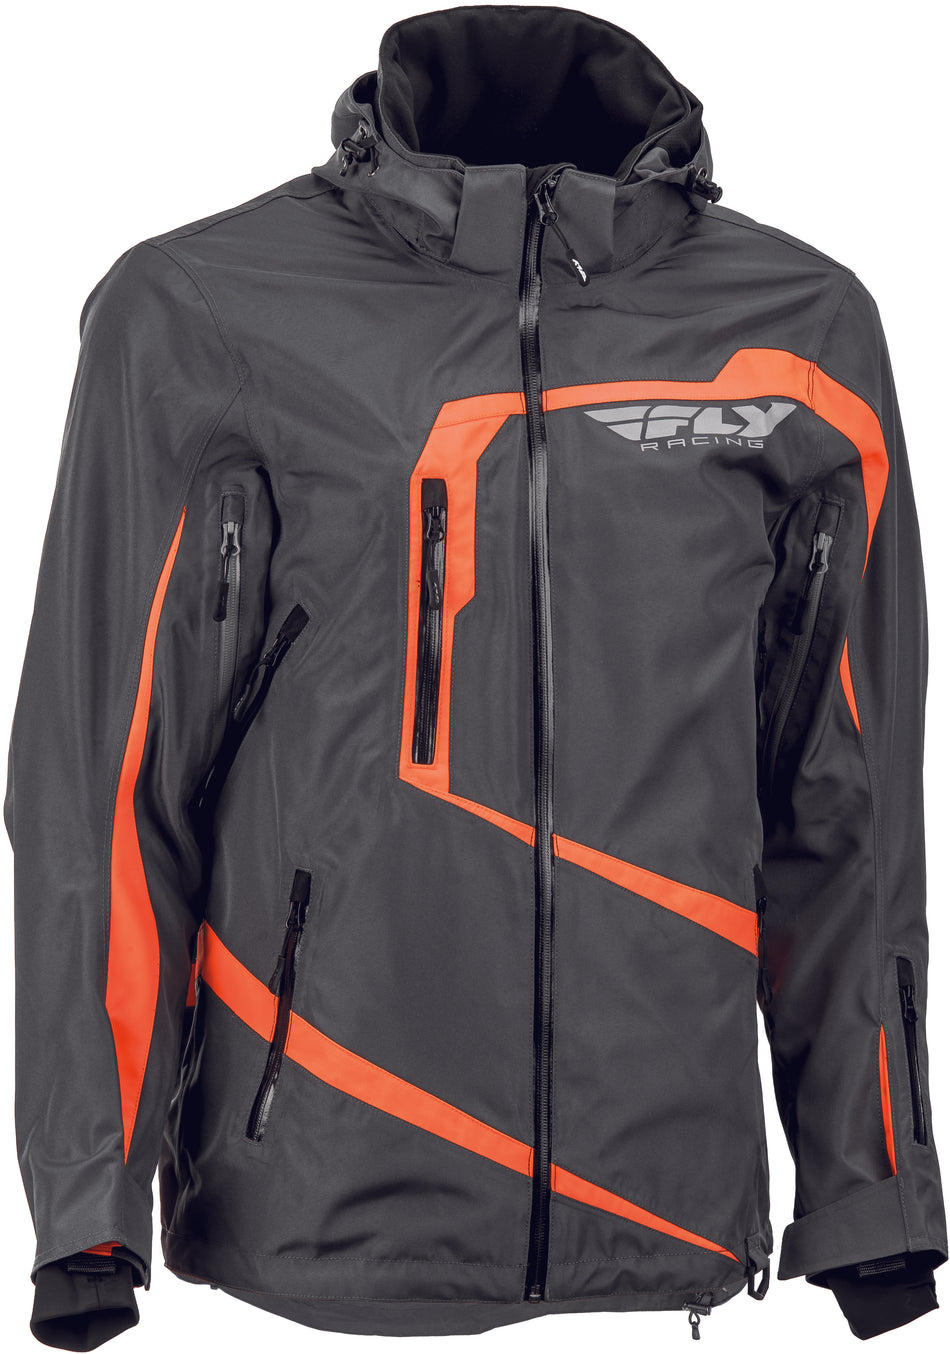 FLY RACING Fly Carbon Jacket Grey/Orange Lg 470-4048L